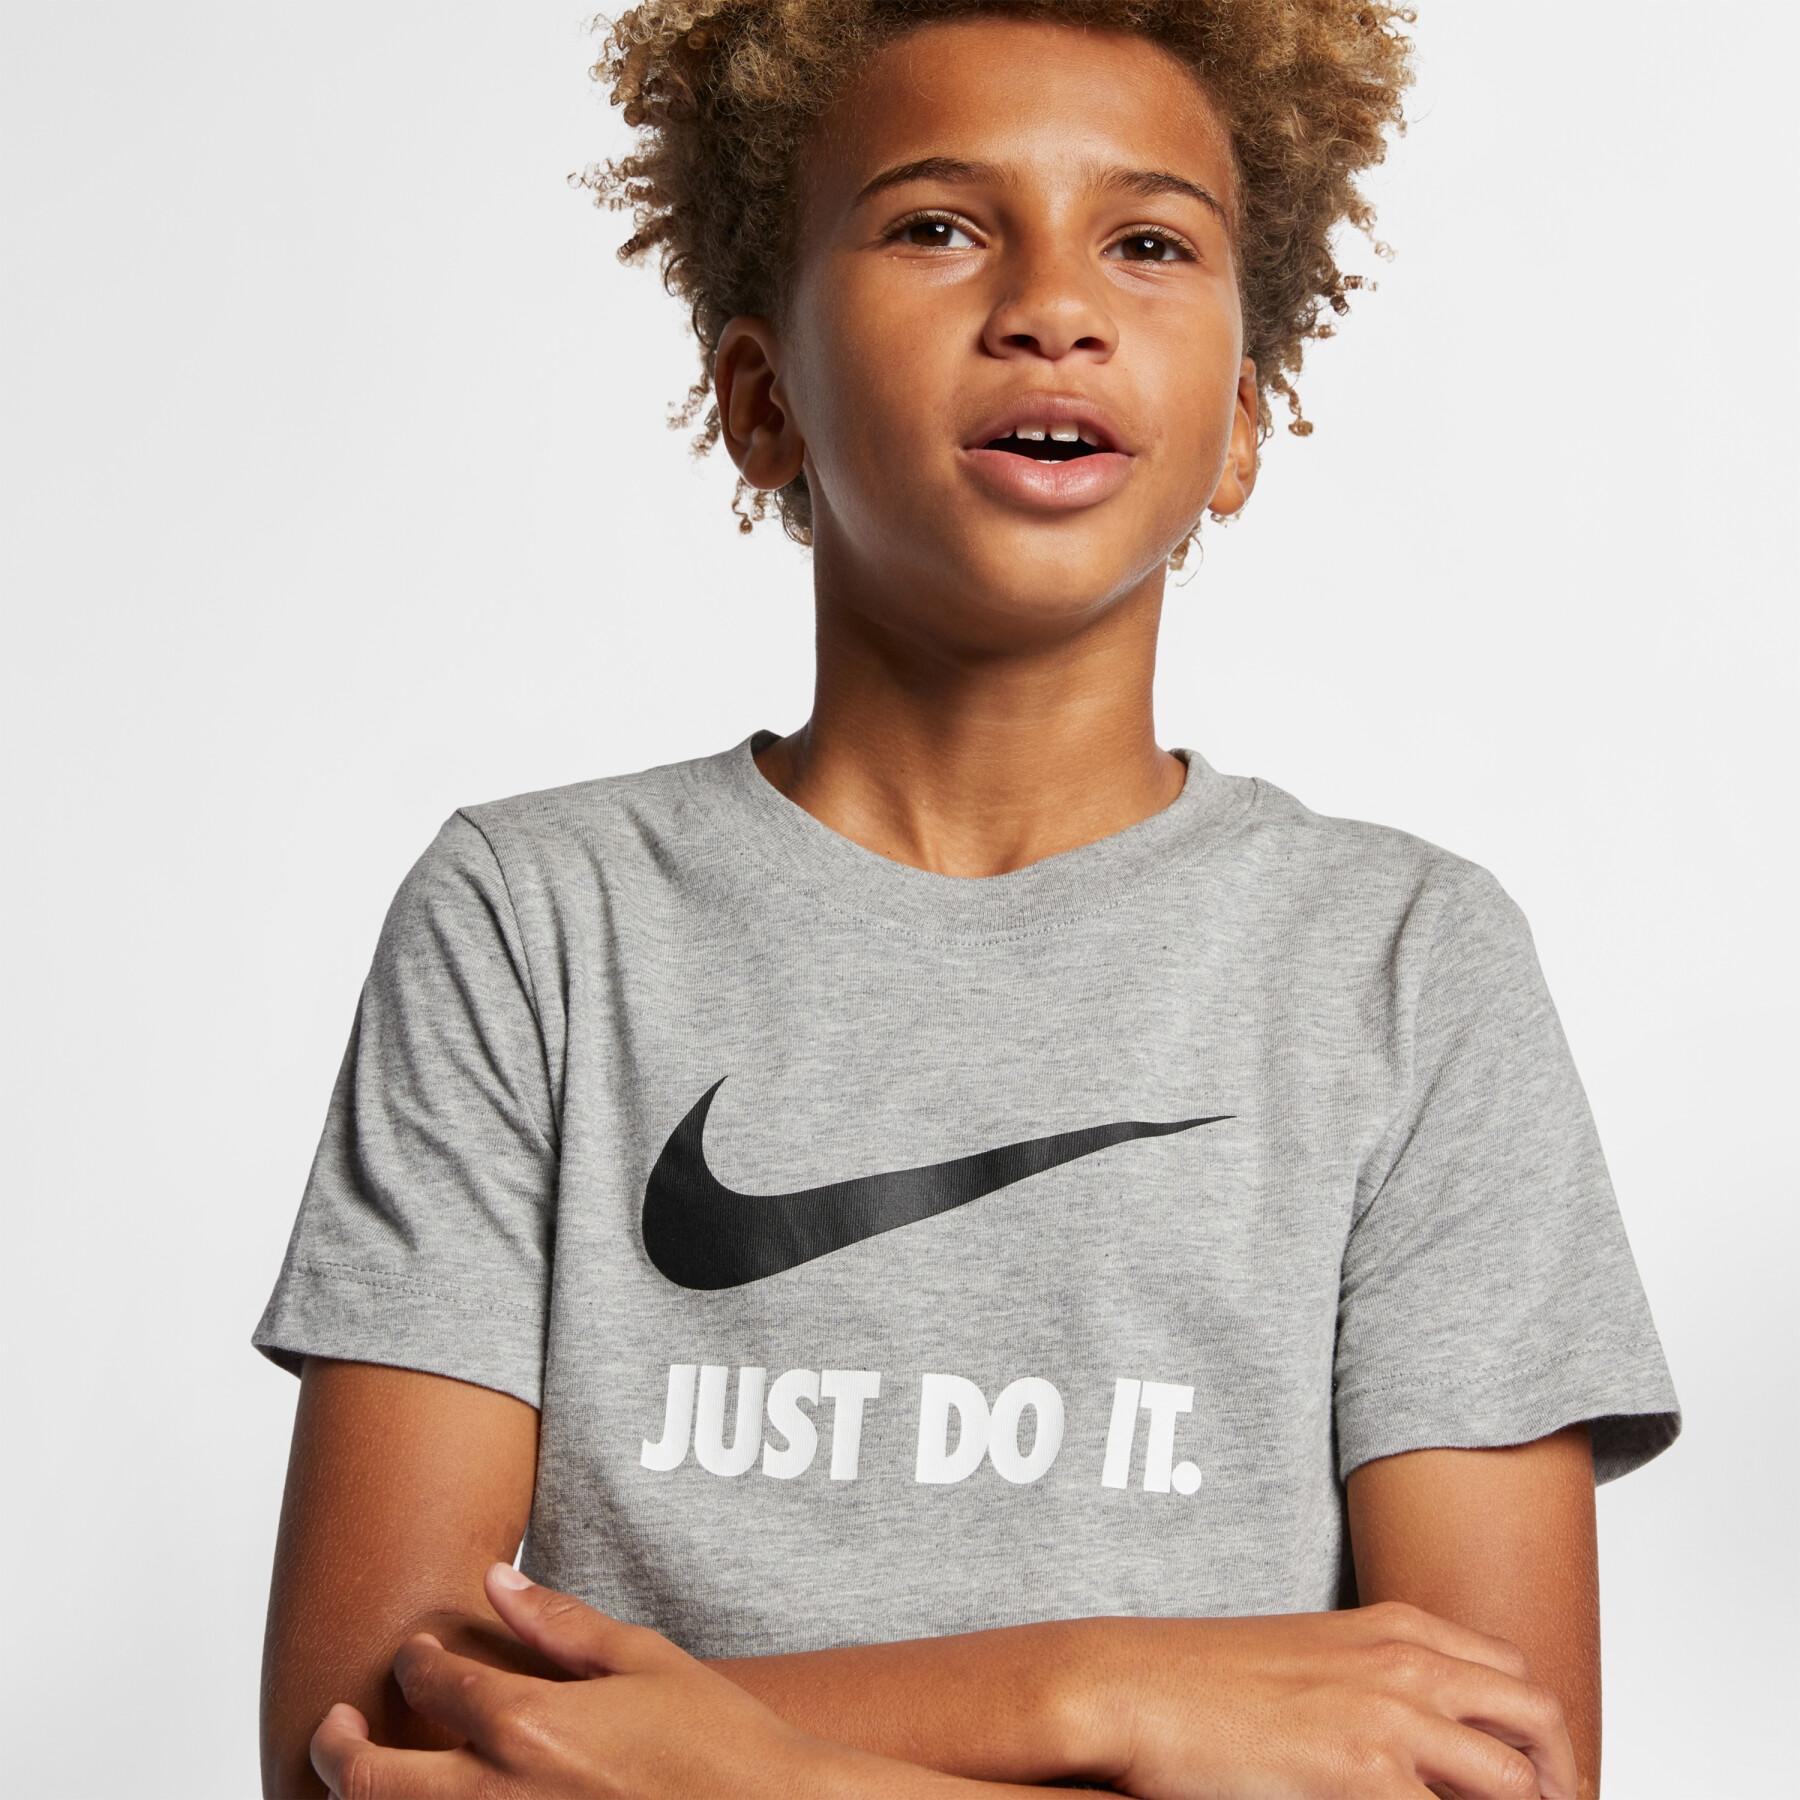 T-shirt enfant Nike Sportswear Jdi